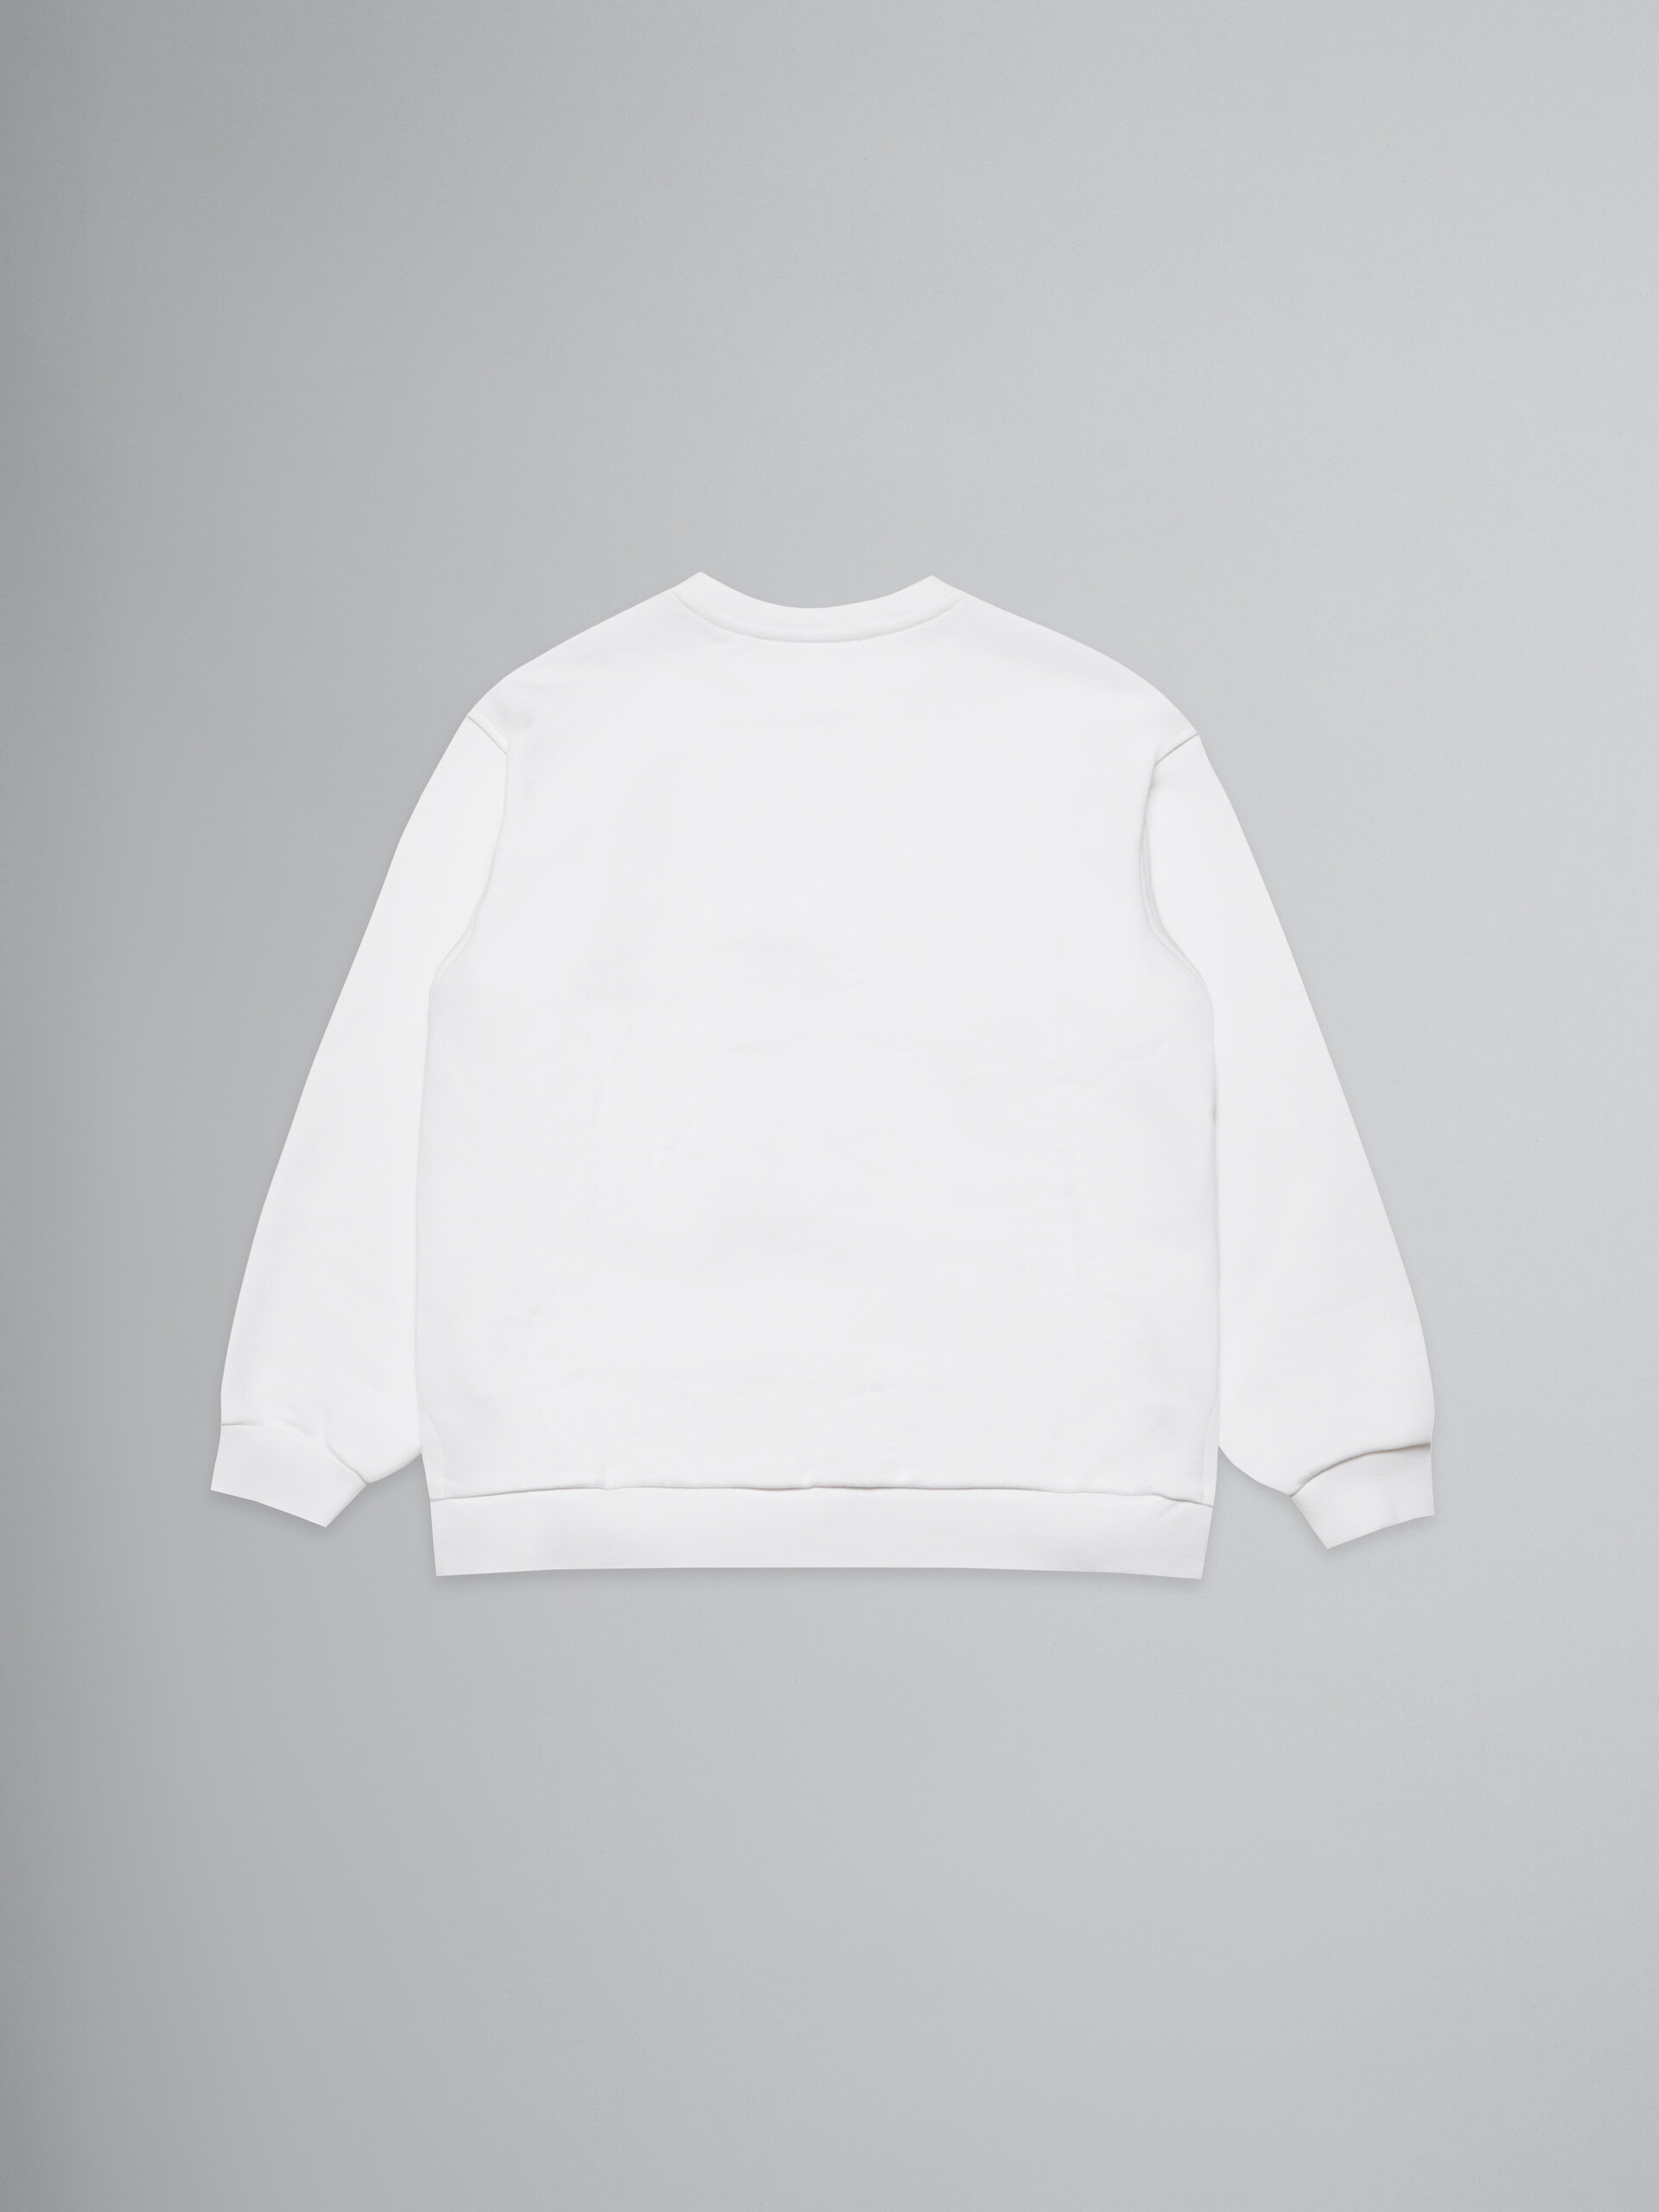 White crew-neck sweatshirt with Marina print - Sweaters - Image 2